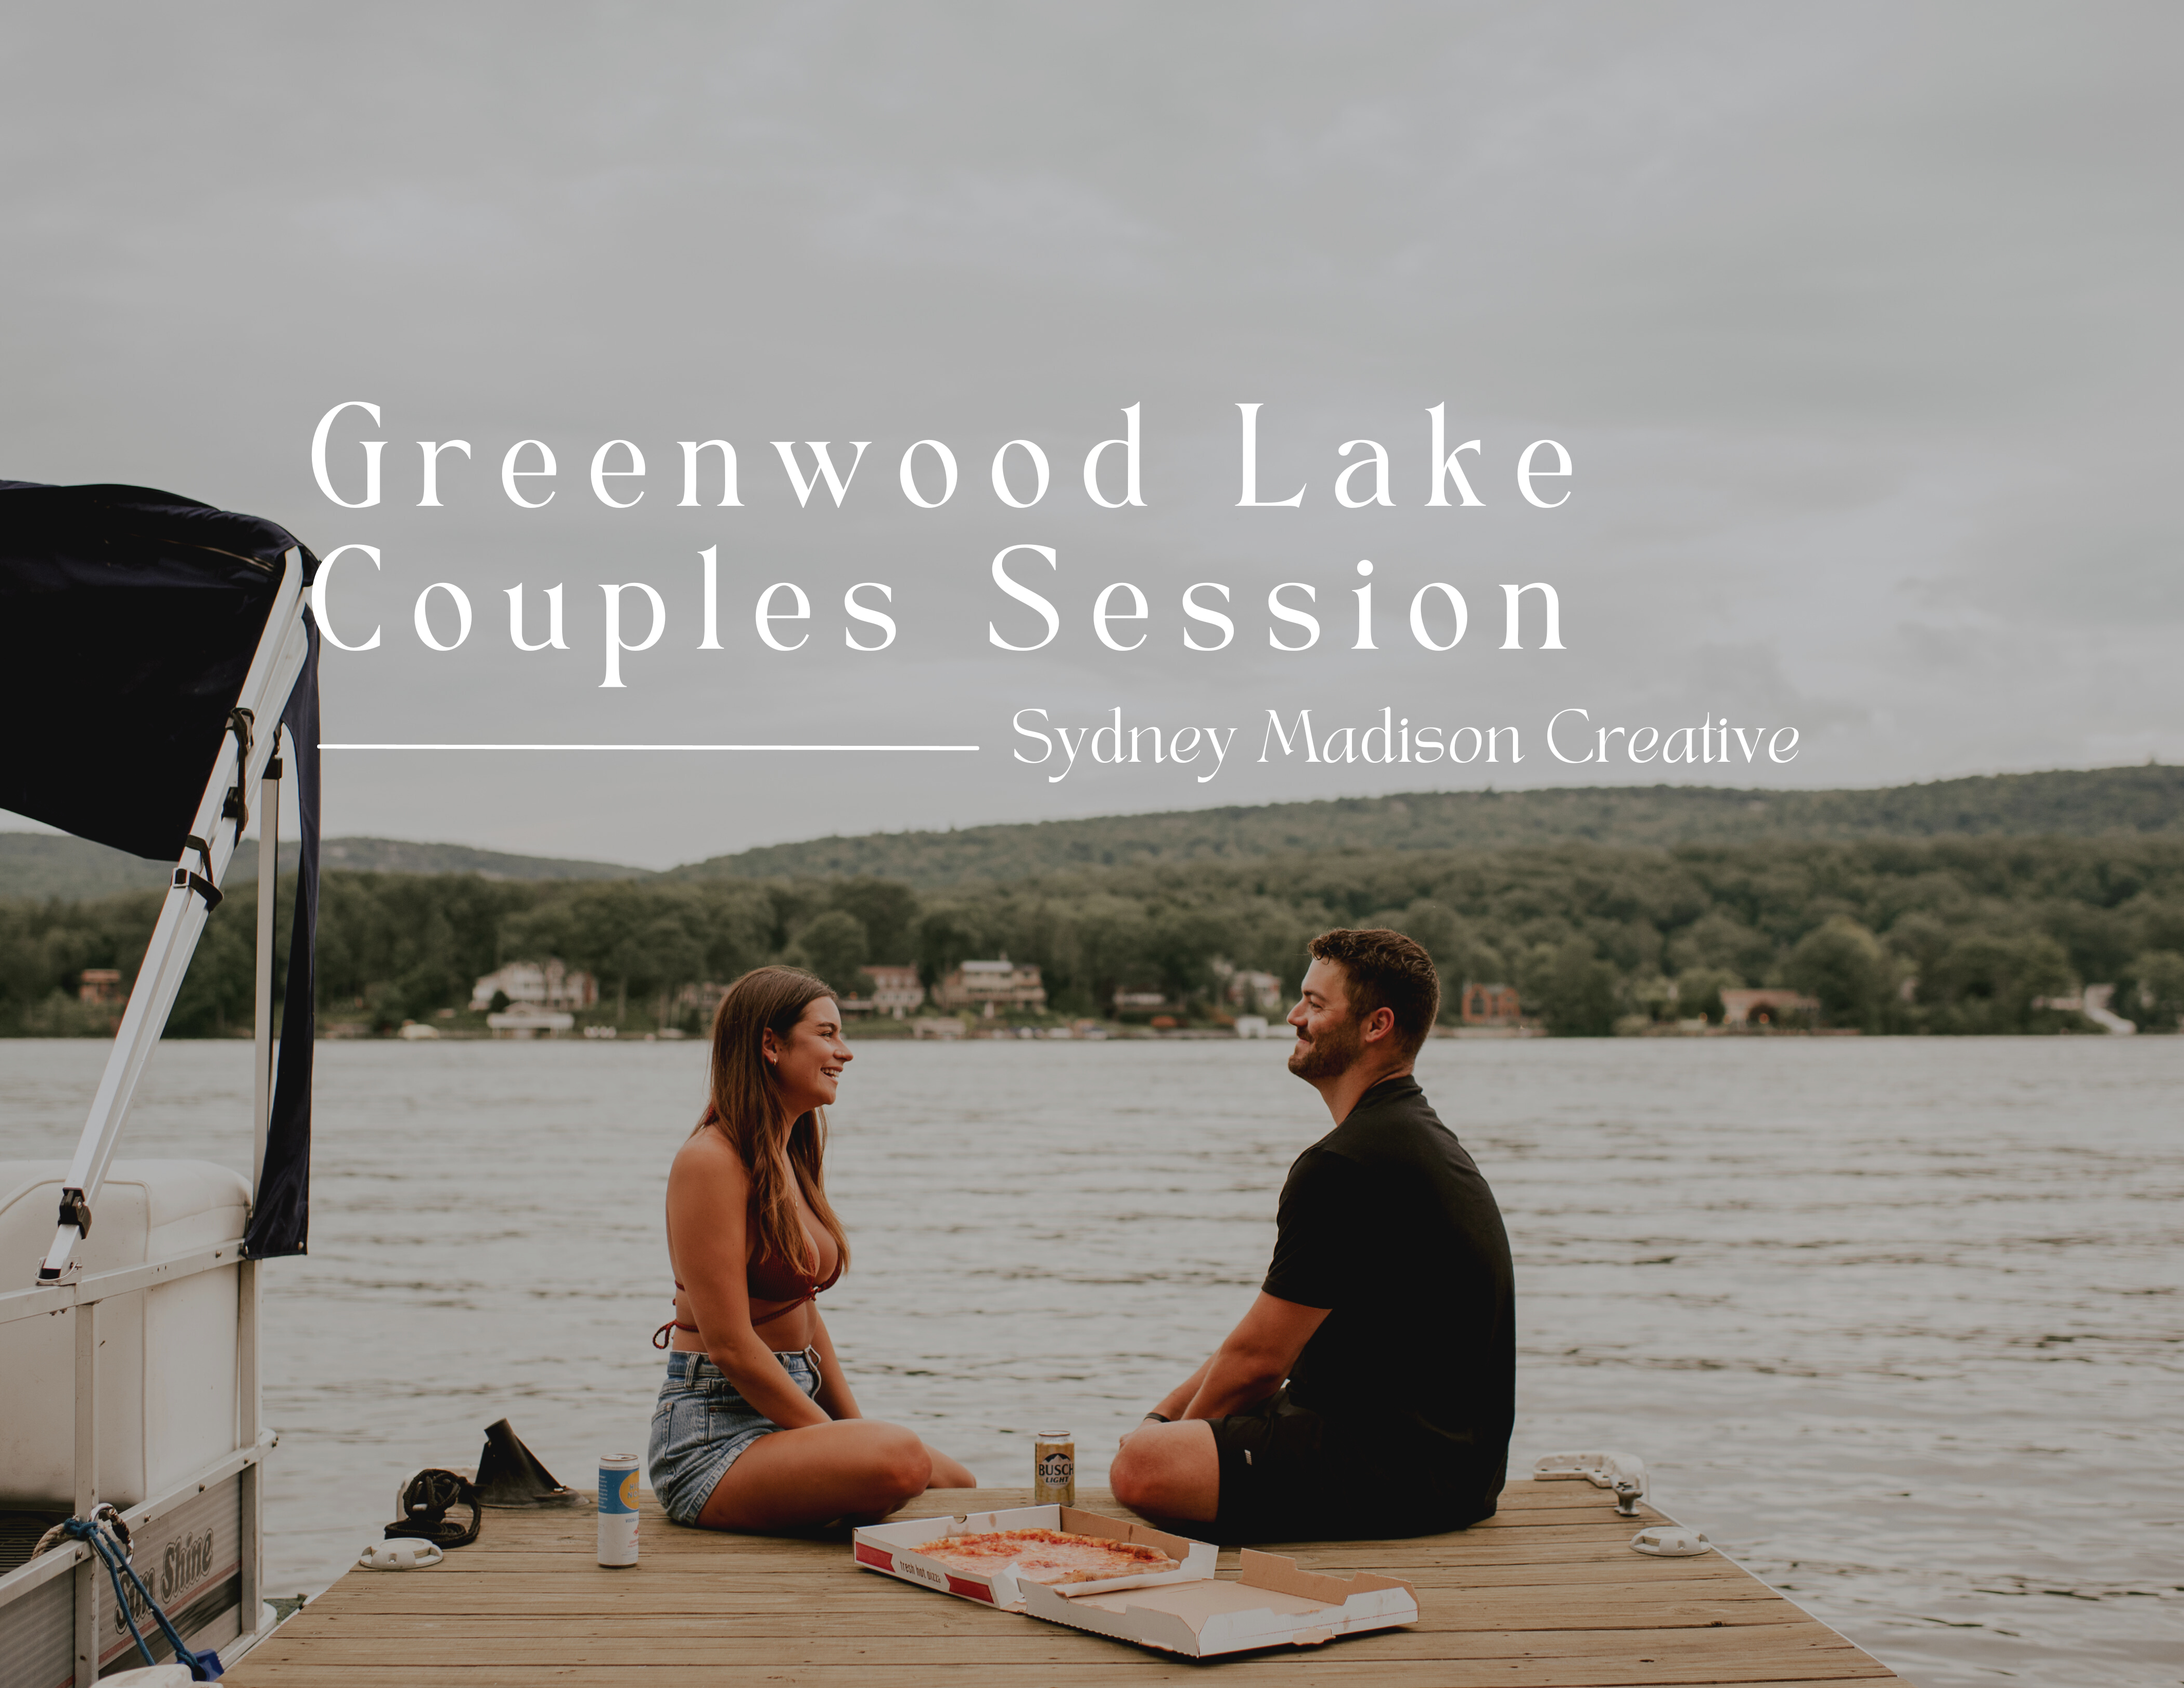 Couples Photography Session at Greenwood Lake, NY by Sydney Madison Creative